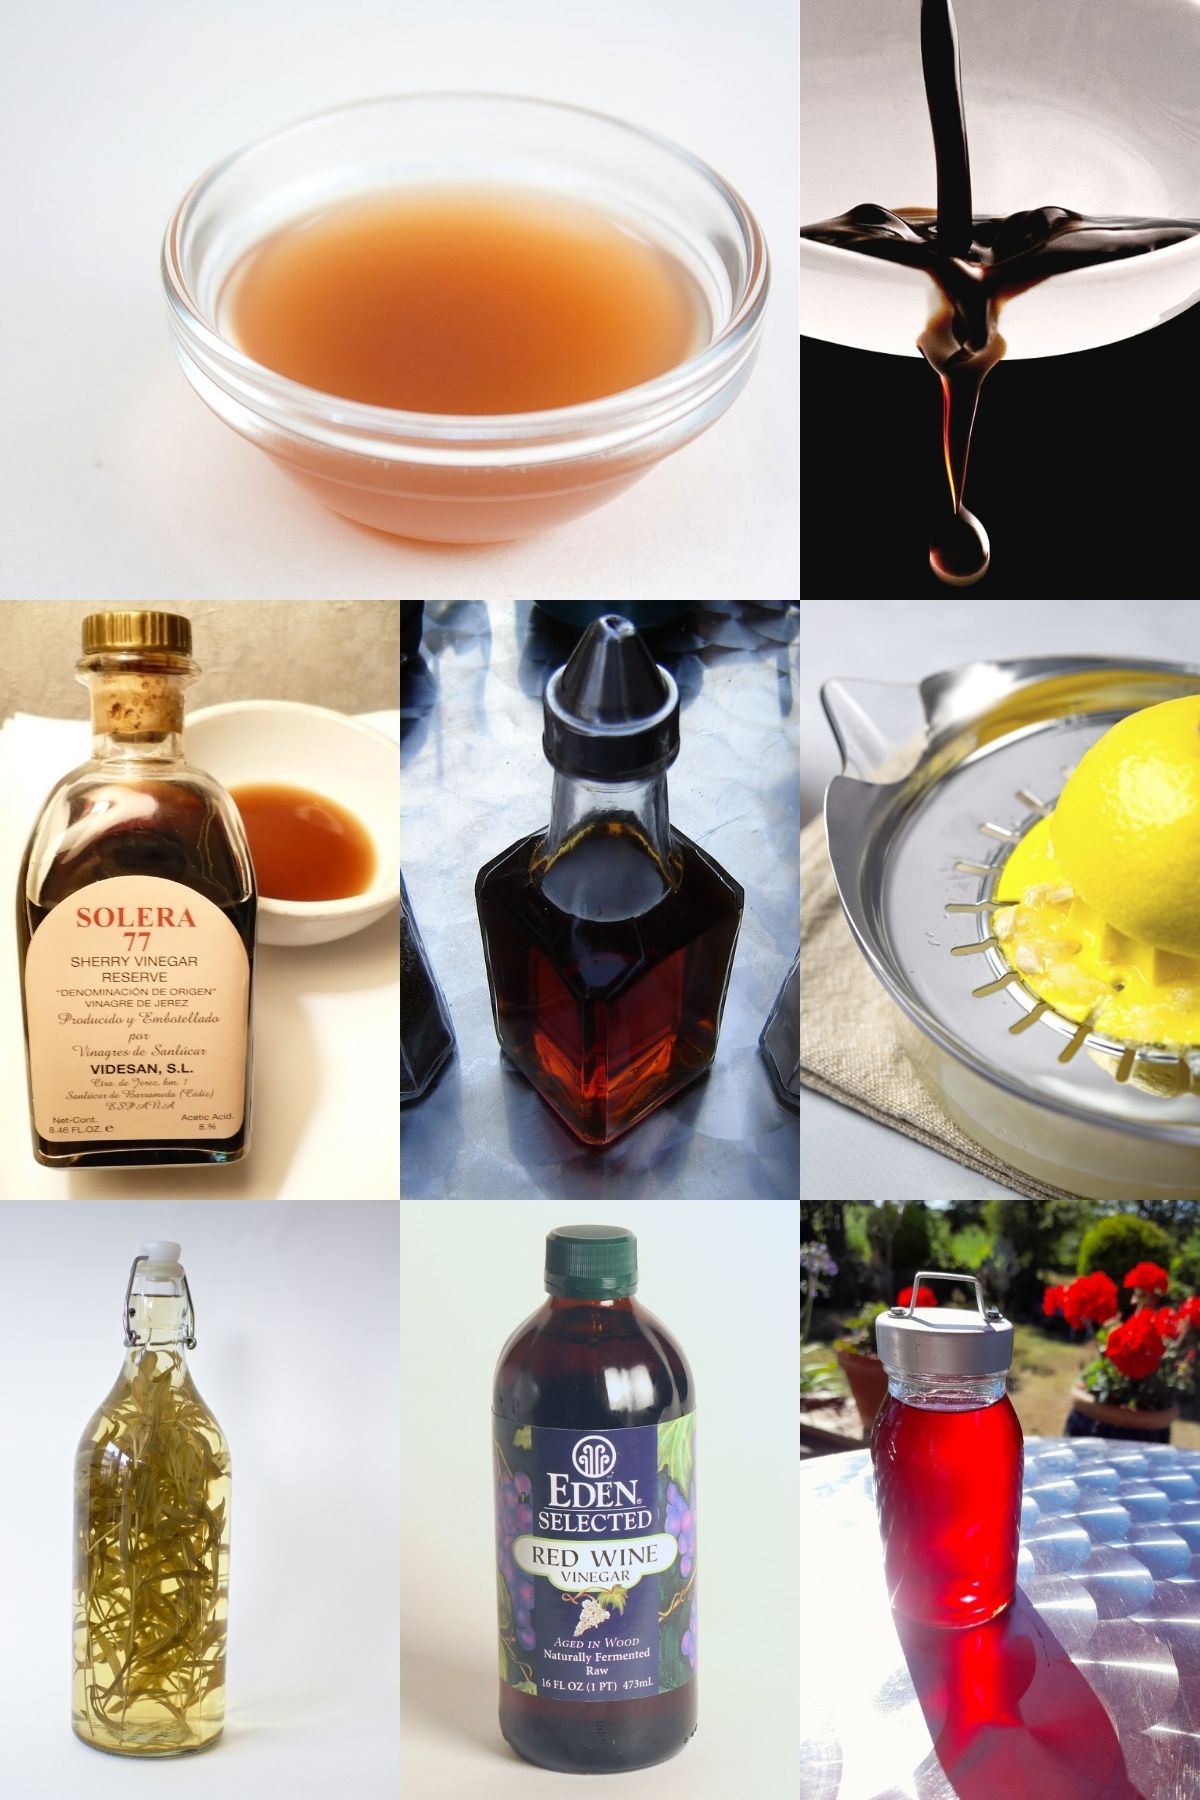 Substitute for Apple Cider Vinegar: Exploring Alternatives